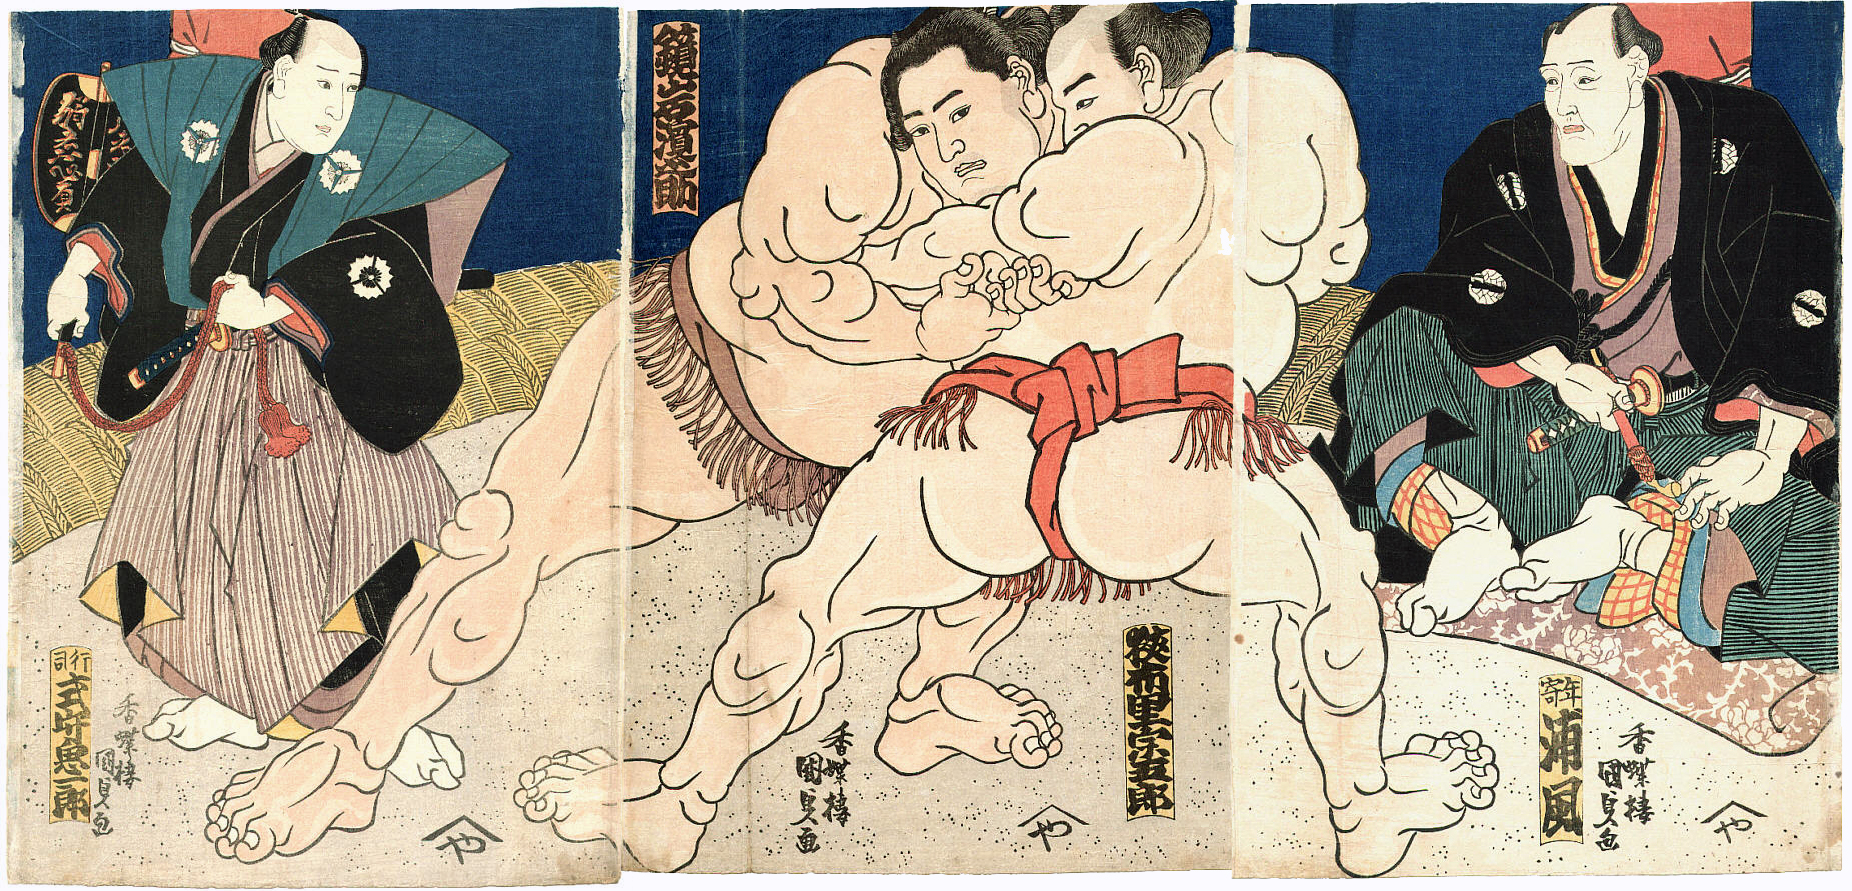 大相撲 - Wikipedia